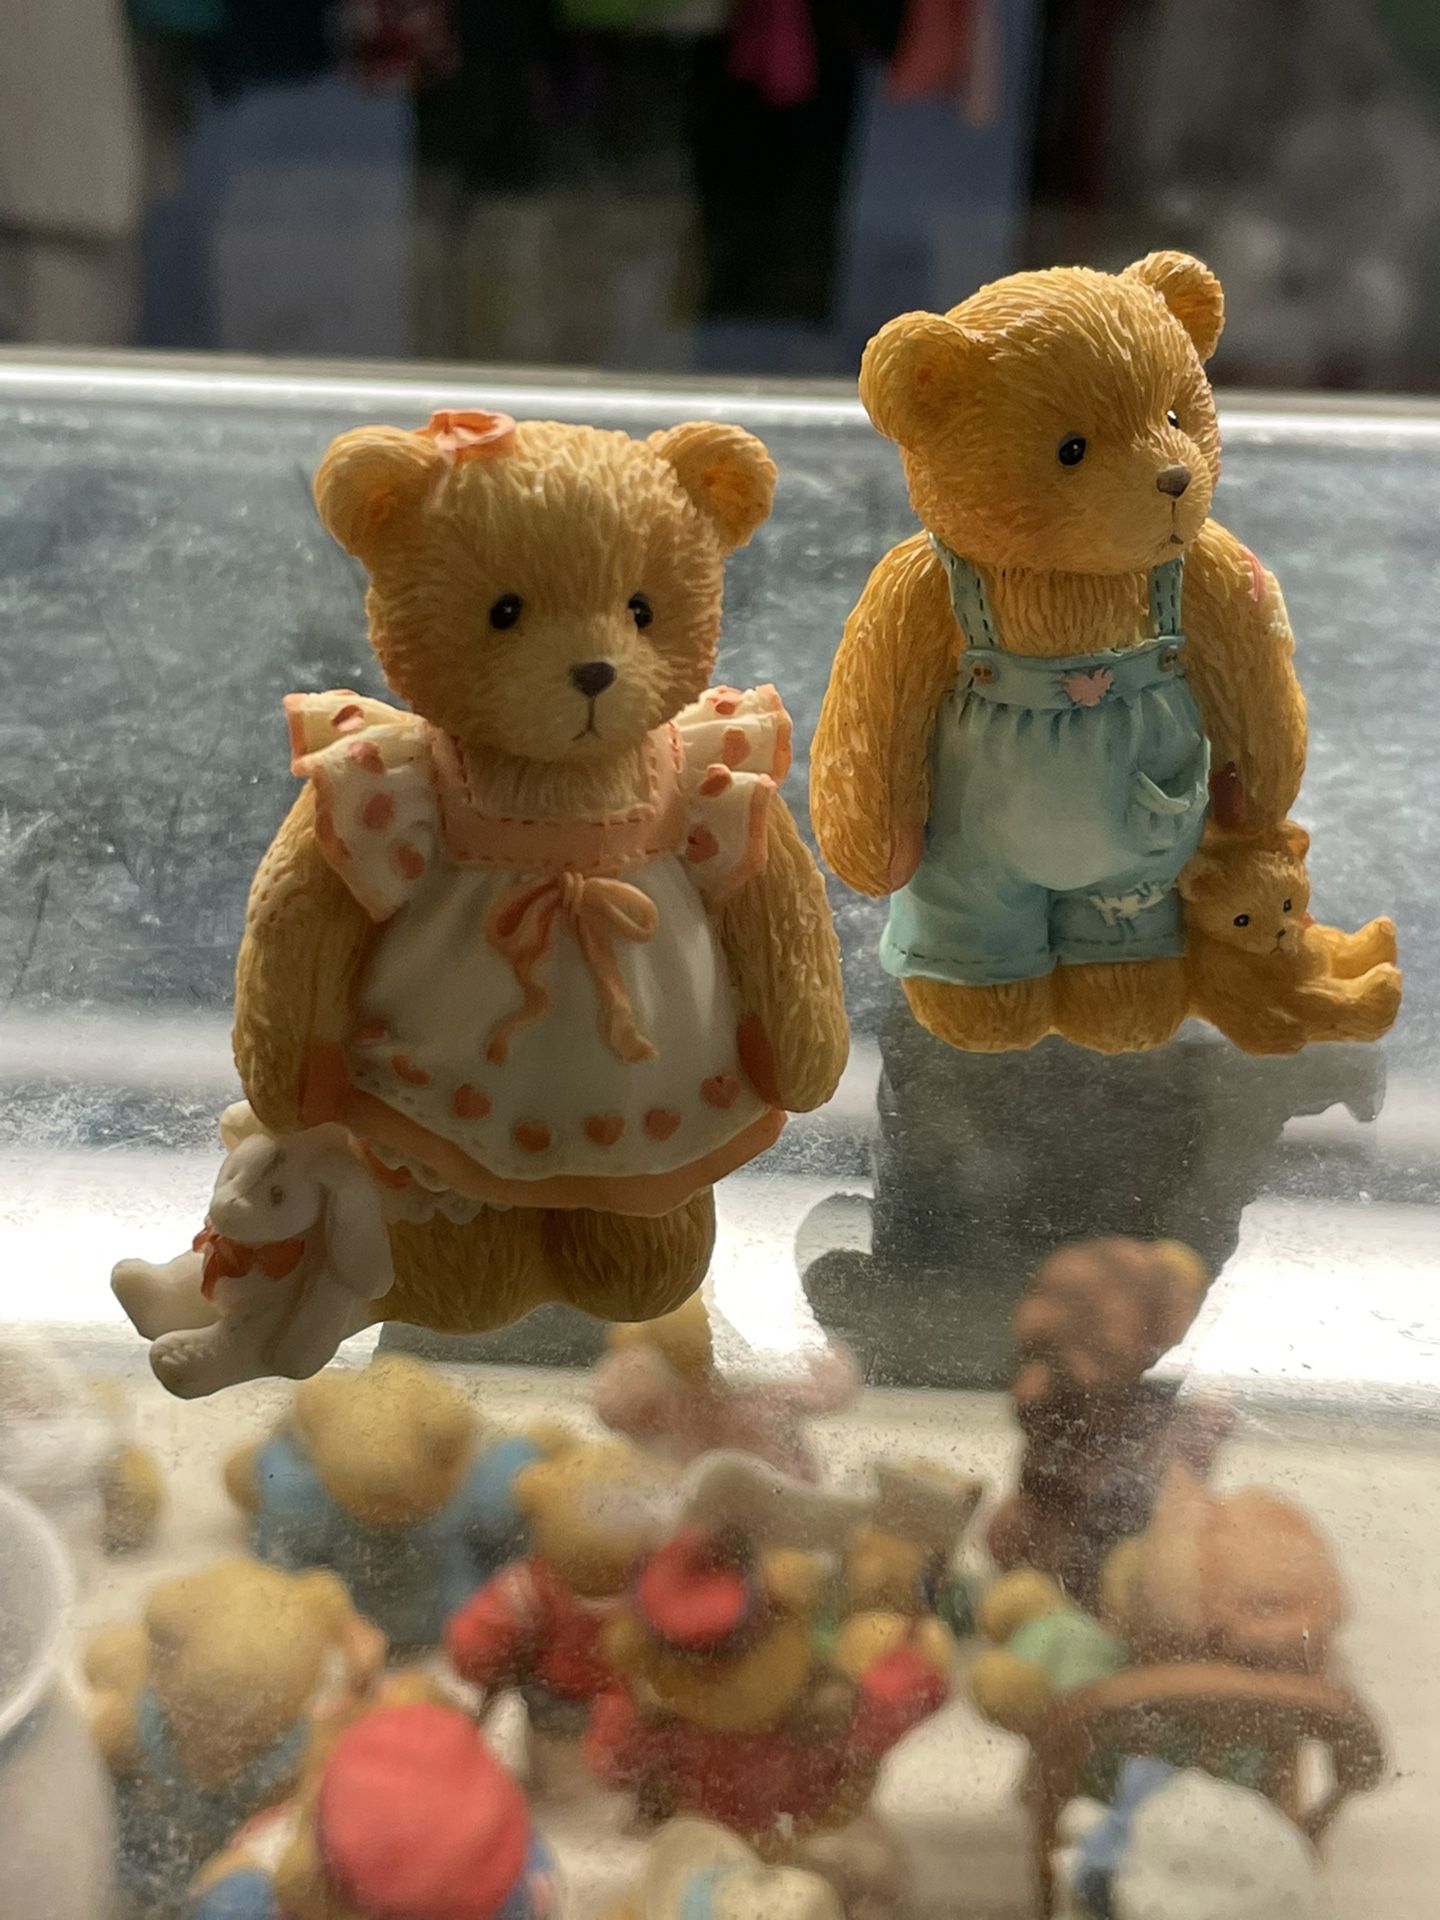 Cherished teddy boy and girl with teddy bears